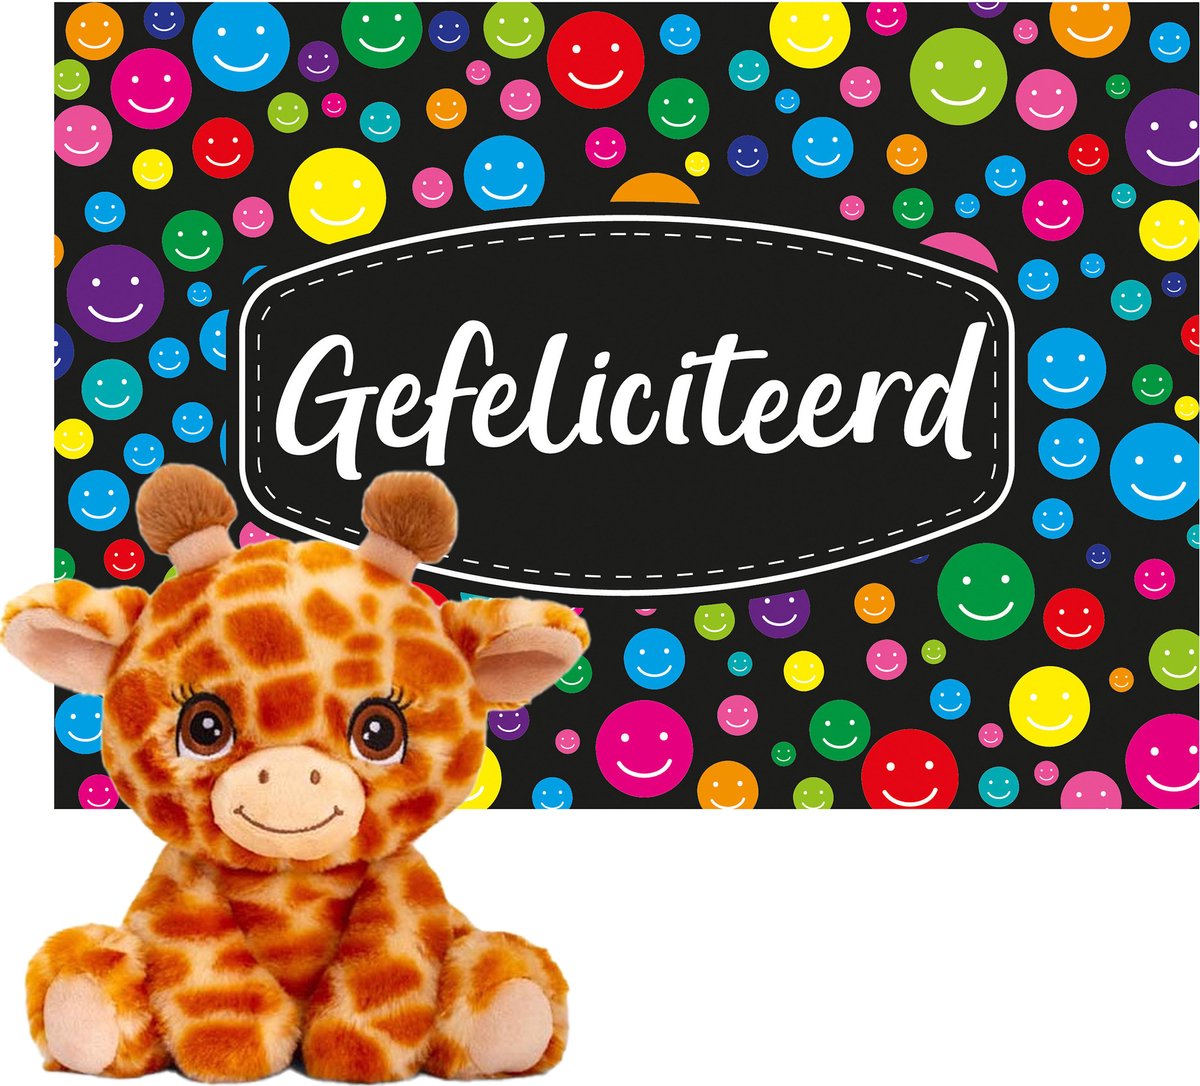 Keel Toys - Cadeaukaart Gefeliciteerd met knuffeldier giraffe 25 cm - Knuffeldier